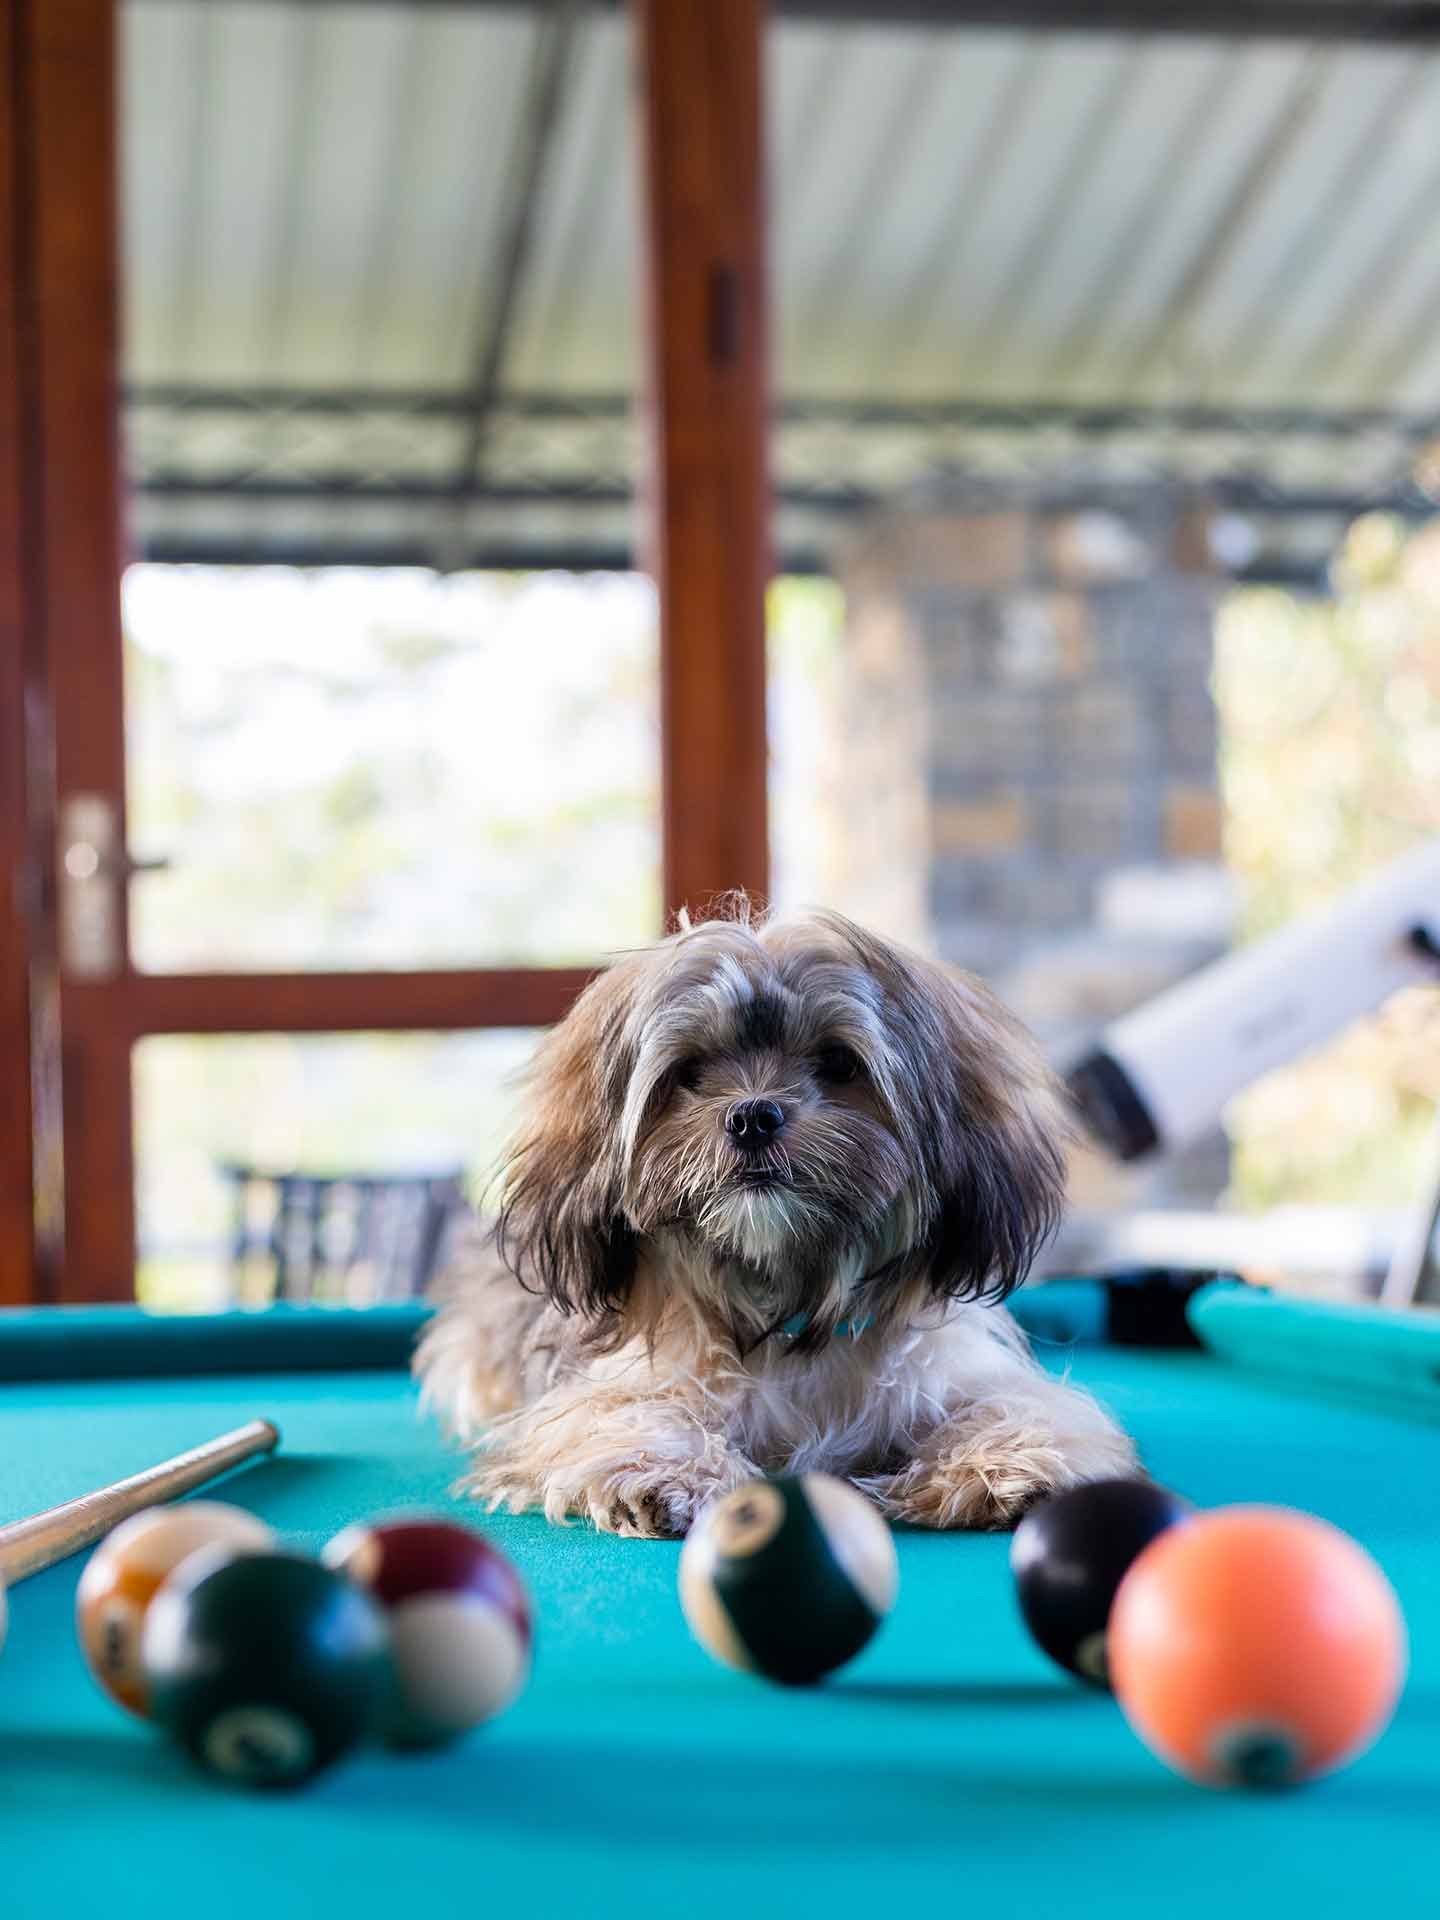 Dog on a pool table